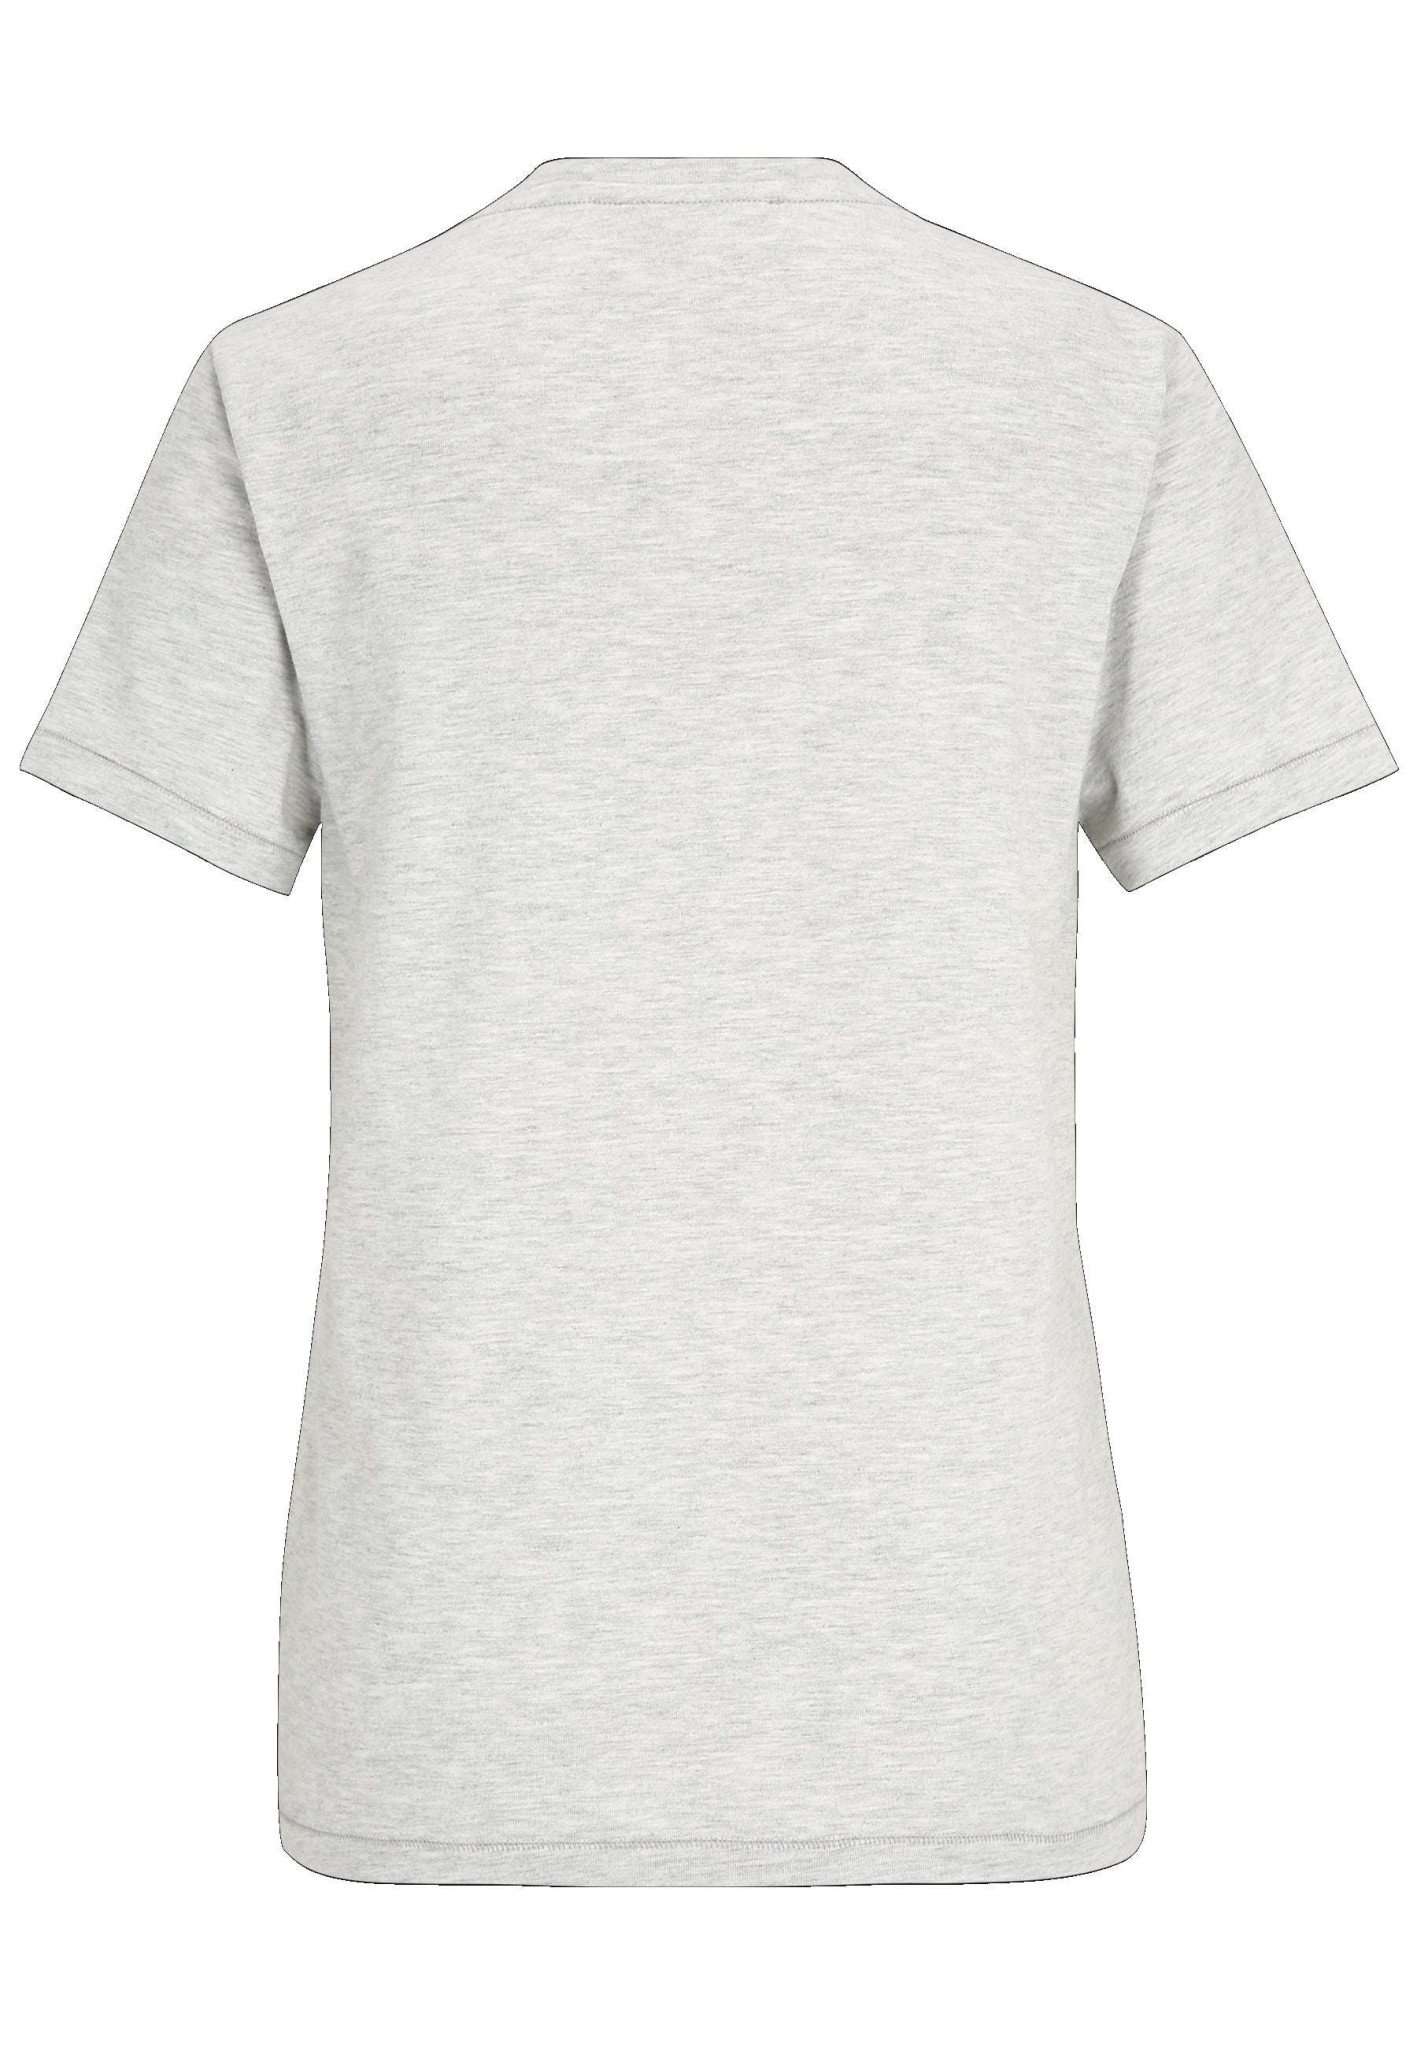 Adria Round Neck Plain Tee in Light Grey Melange T-Shirts Tamaris   